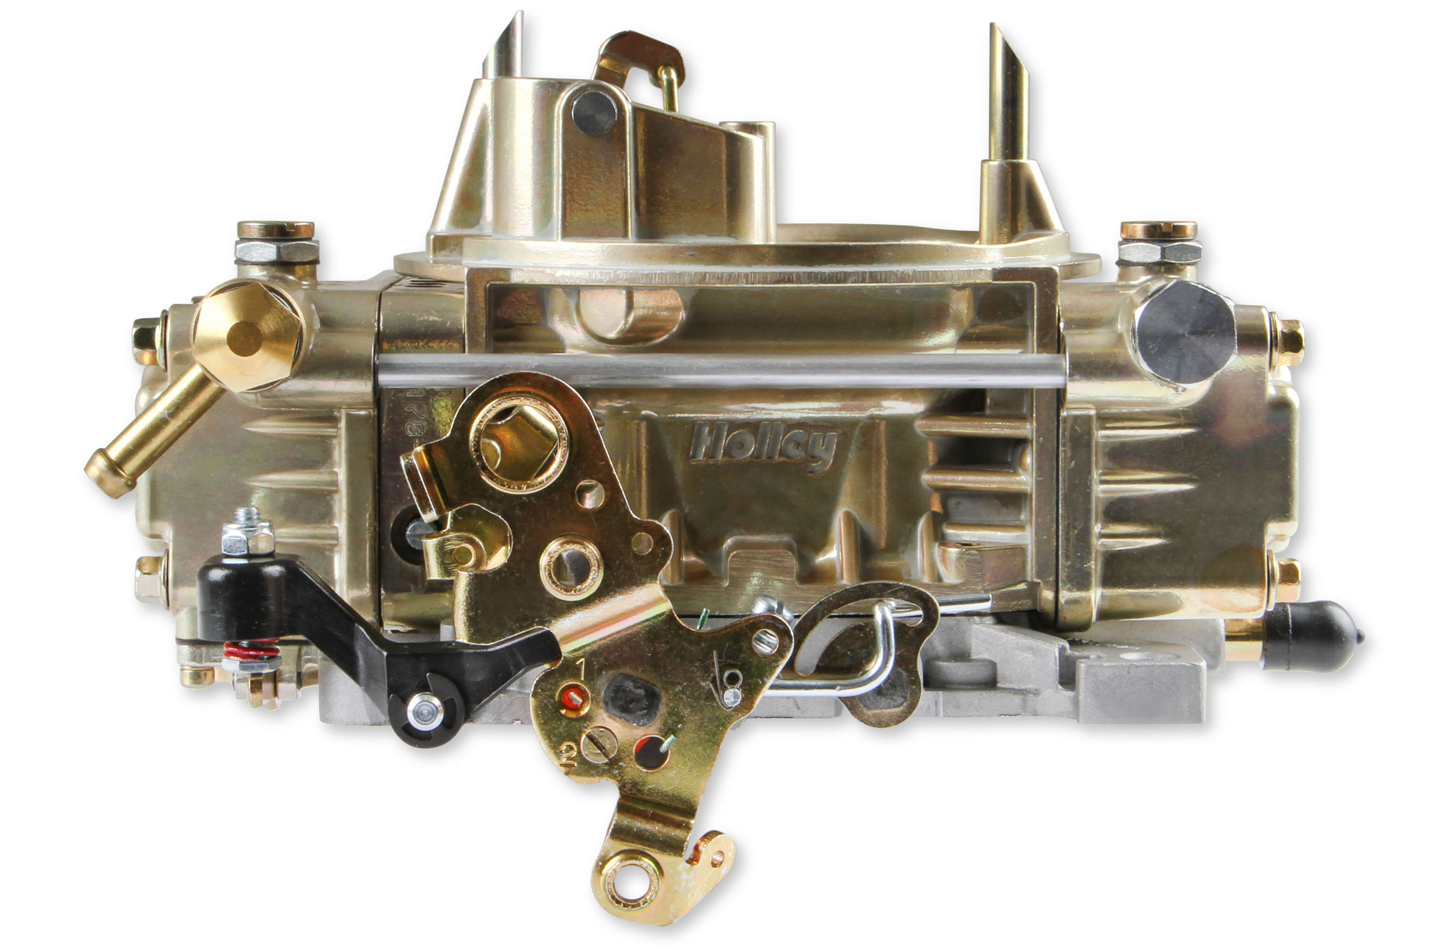 Holley 0-1848-2 Carburetor, Model 4160, 4-Barrel, 465 CFM, Square Bore, Hot Air Choke, Vacuum Secondary, Single Inlet, Chromate, Each